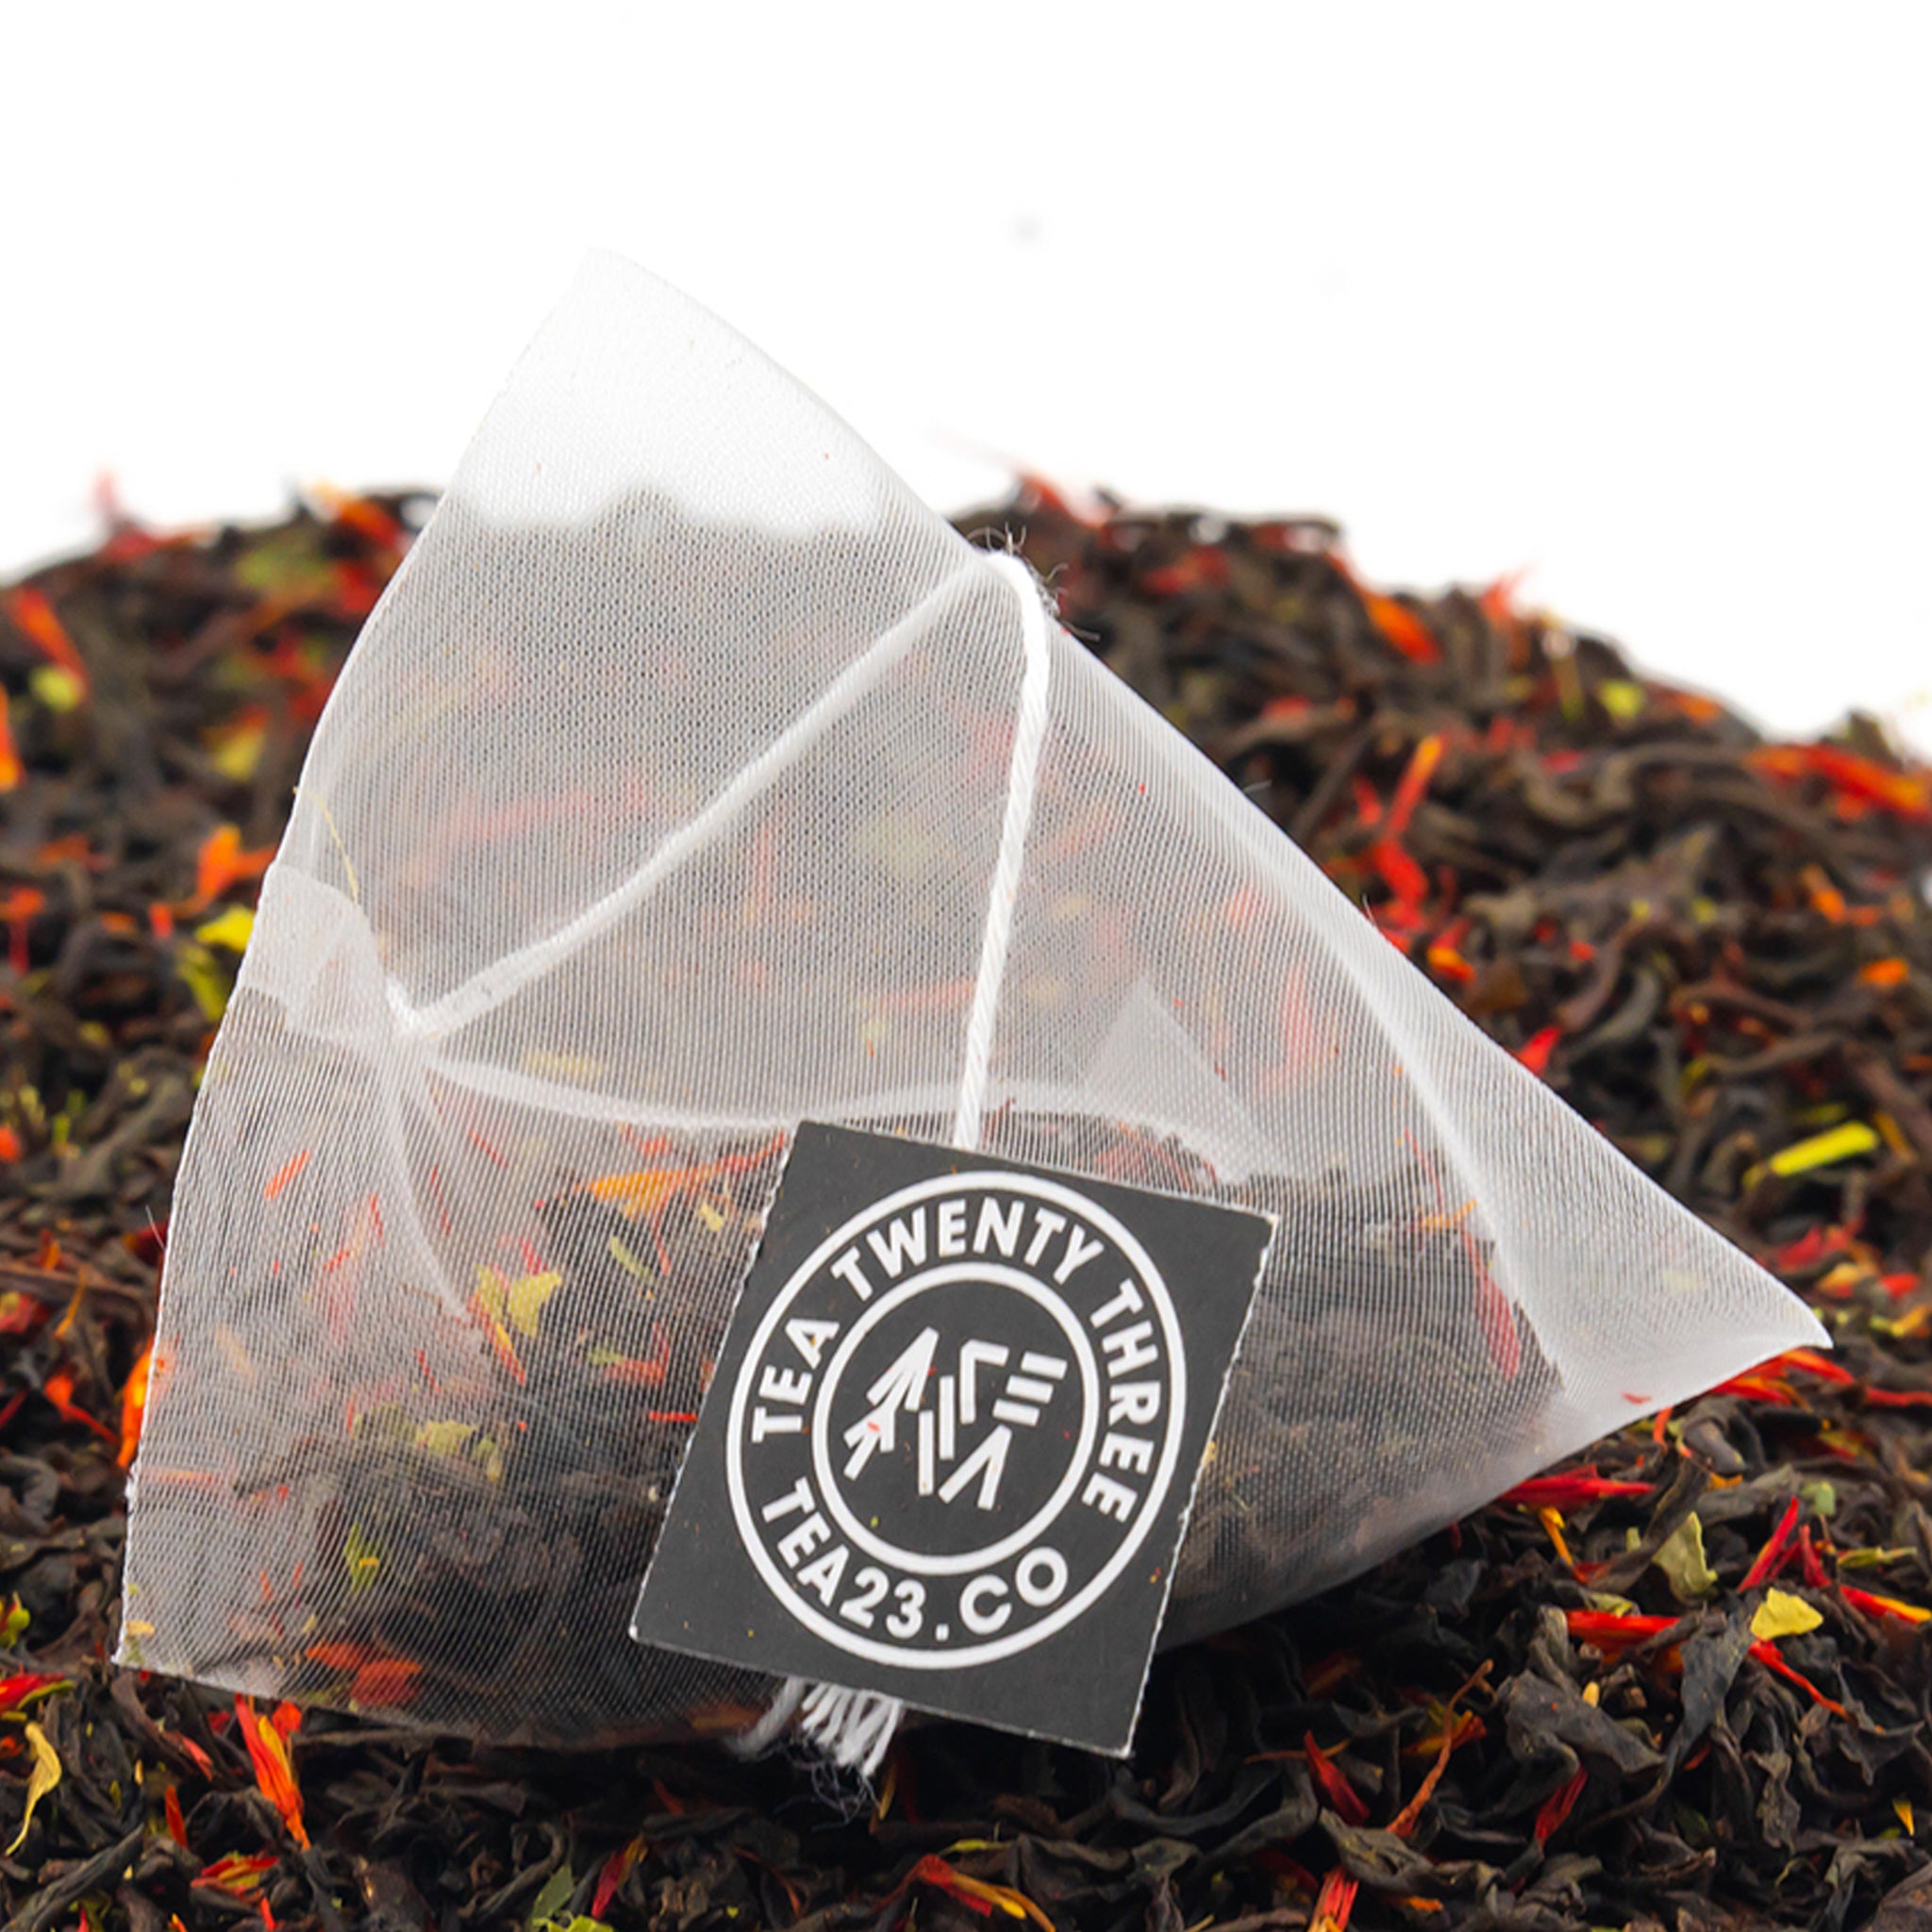 An Earl Grey pyramid tea bag sits on a pile of loose Earl grey tea. Shop the range of TEA23 tea bag teas and infusion.